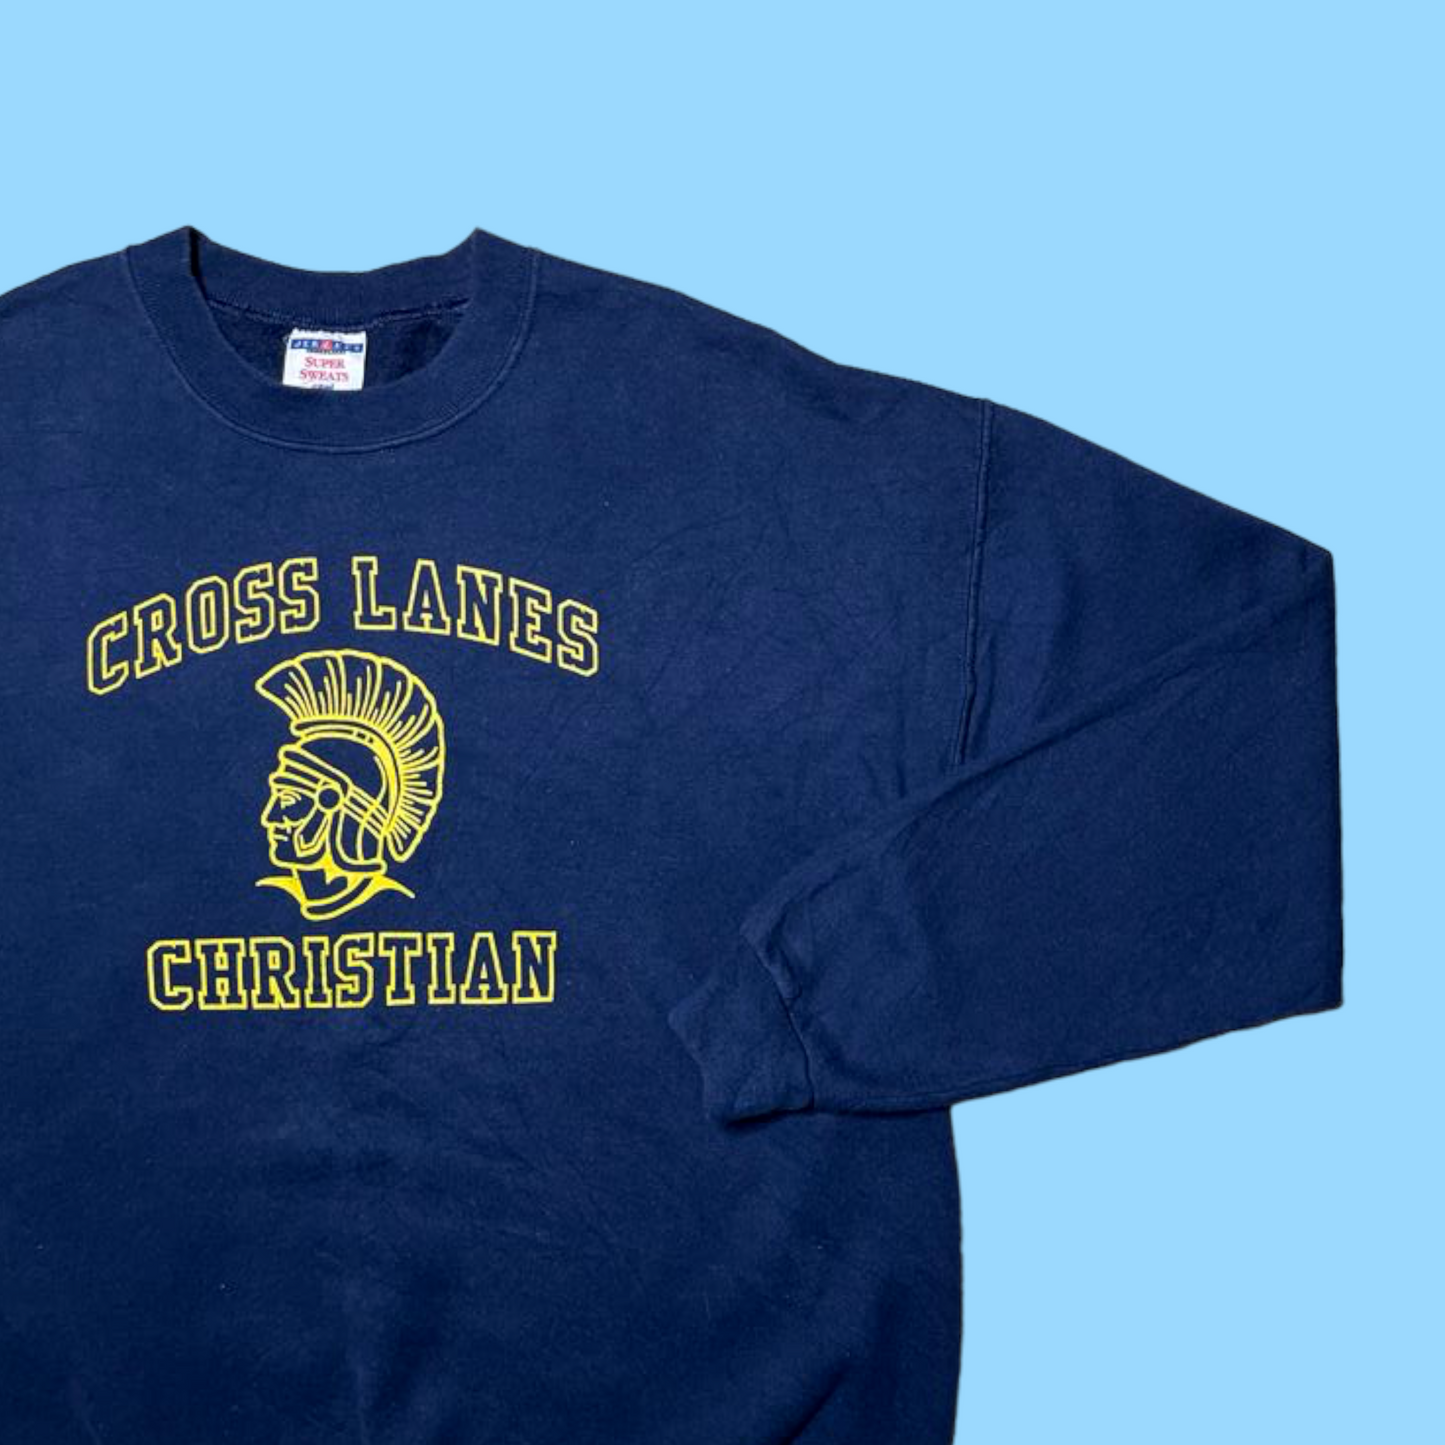 Vintage Cross Lanes sweatshirt - XL